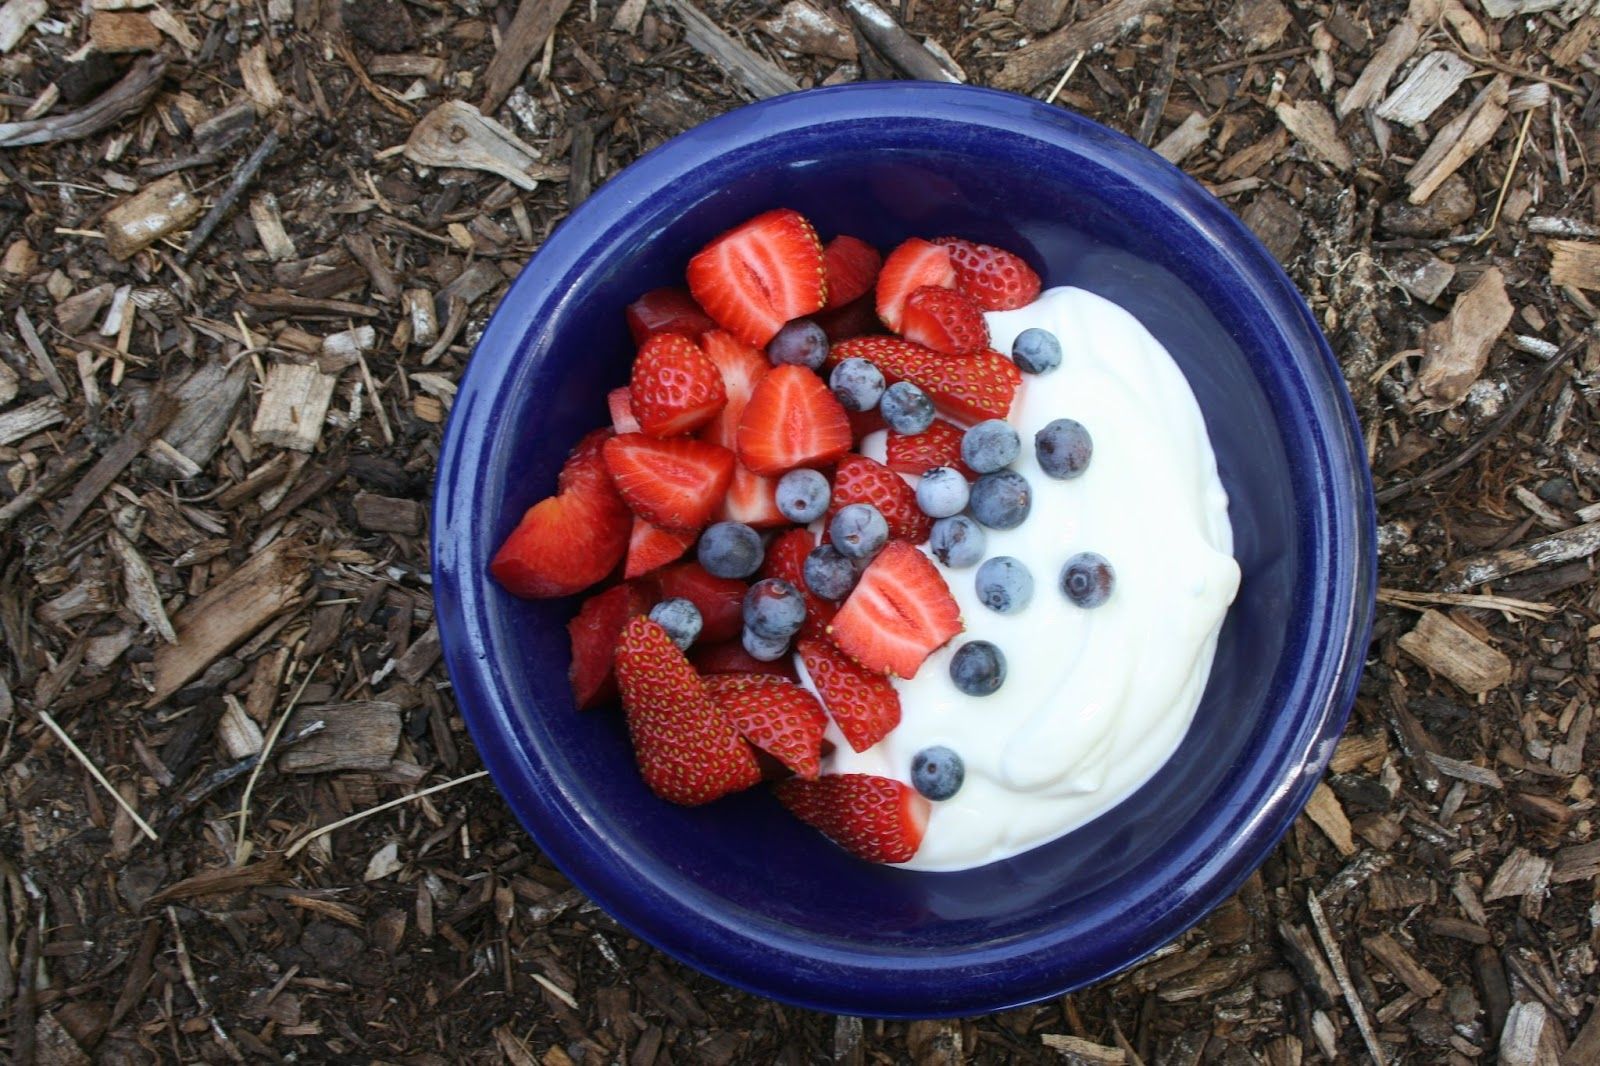 bowl of yogurt